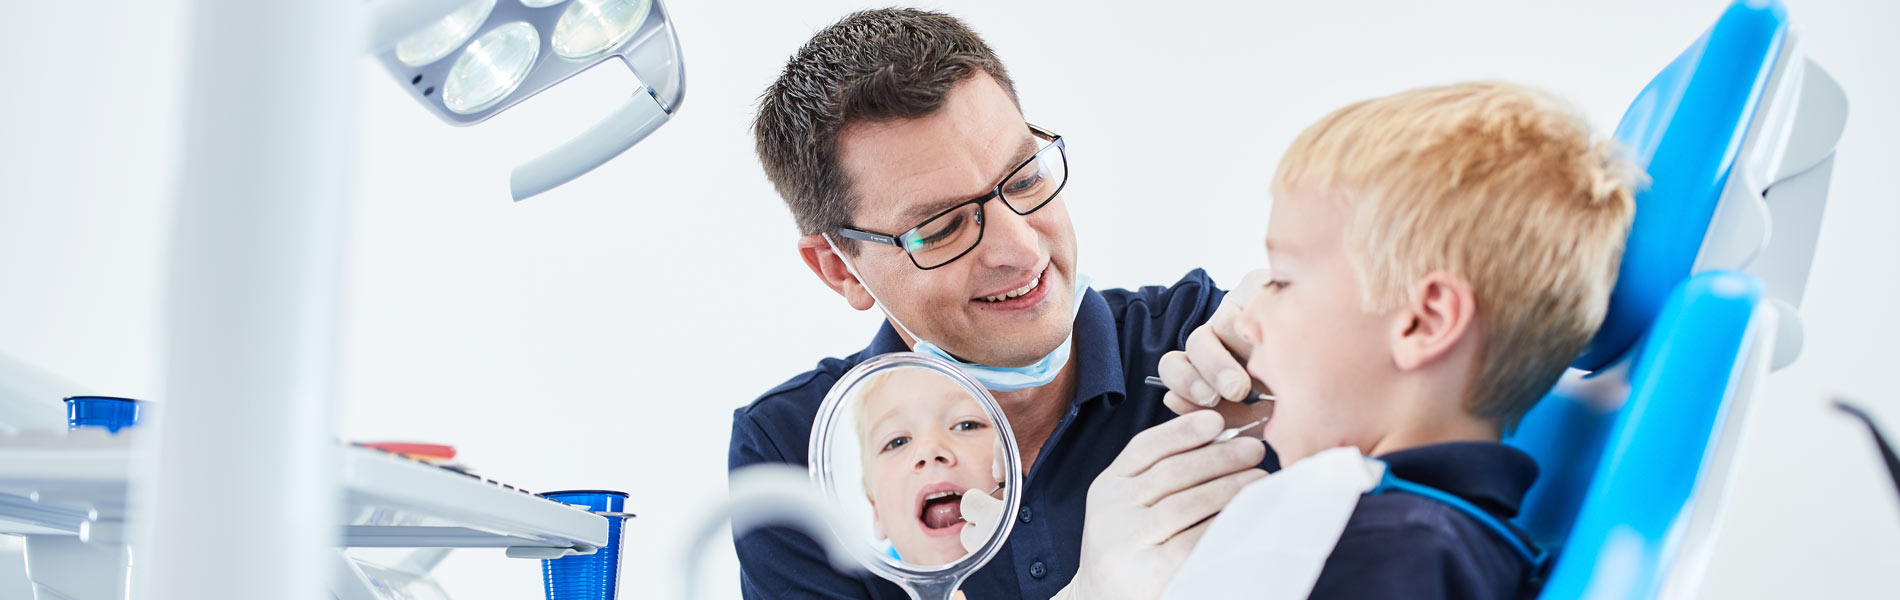 Zahnarztpraxis Dr. Wiesner - Behandlungsspektrum 5